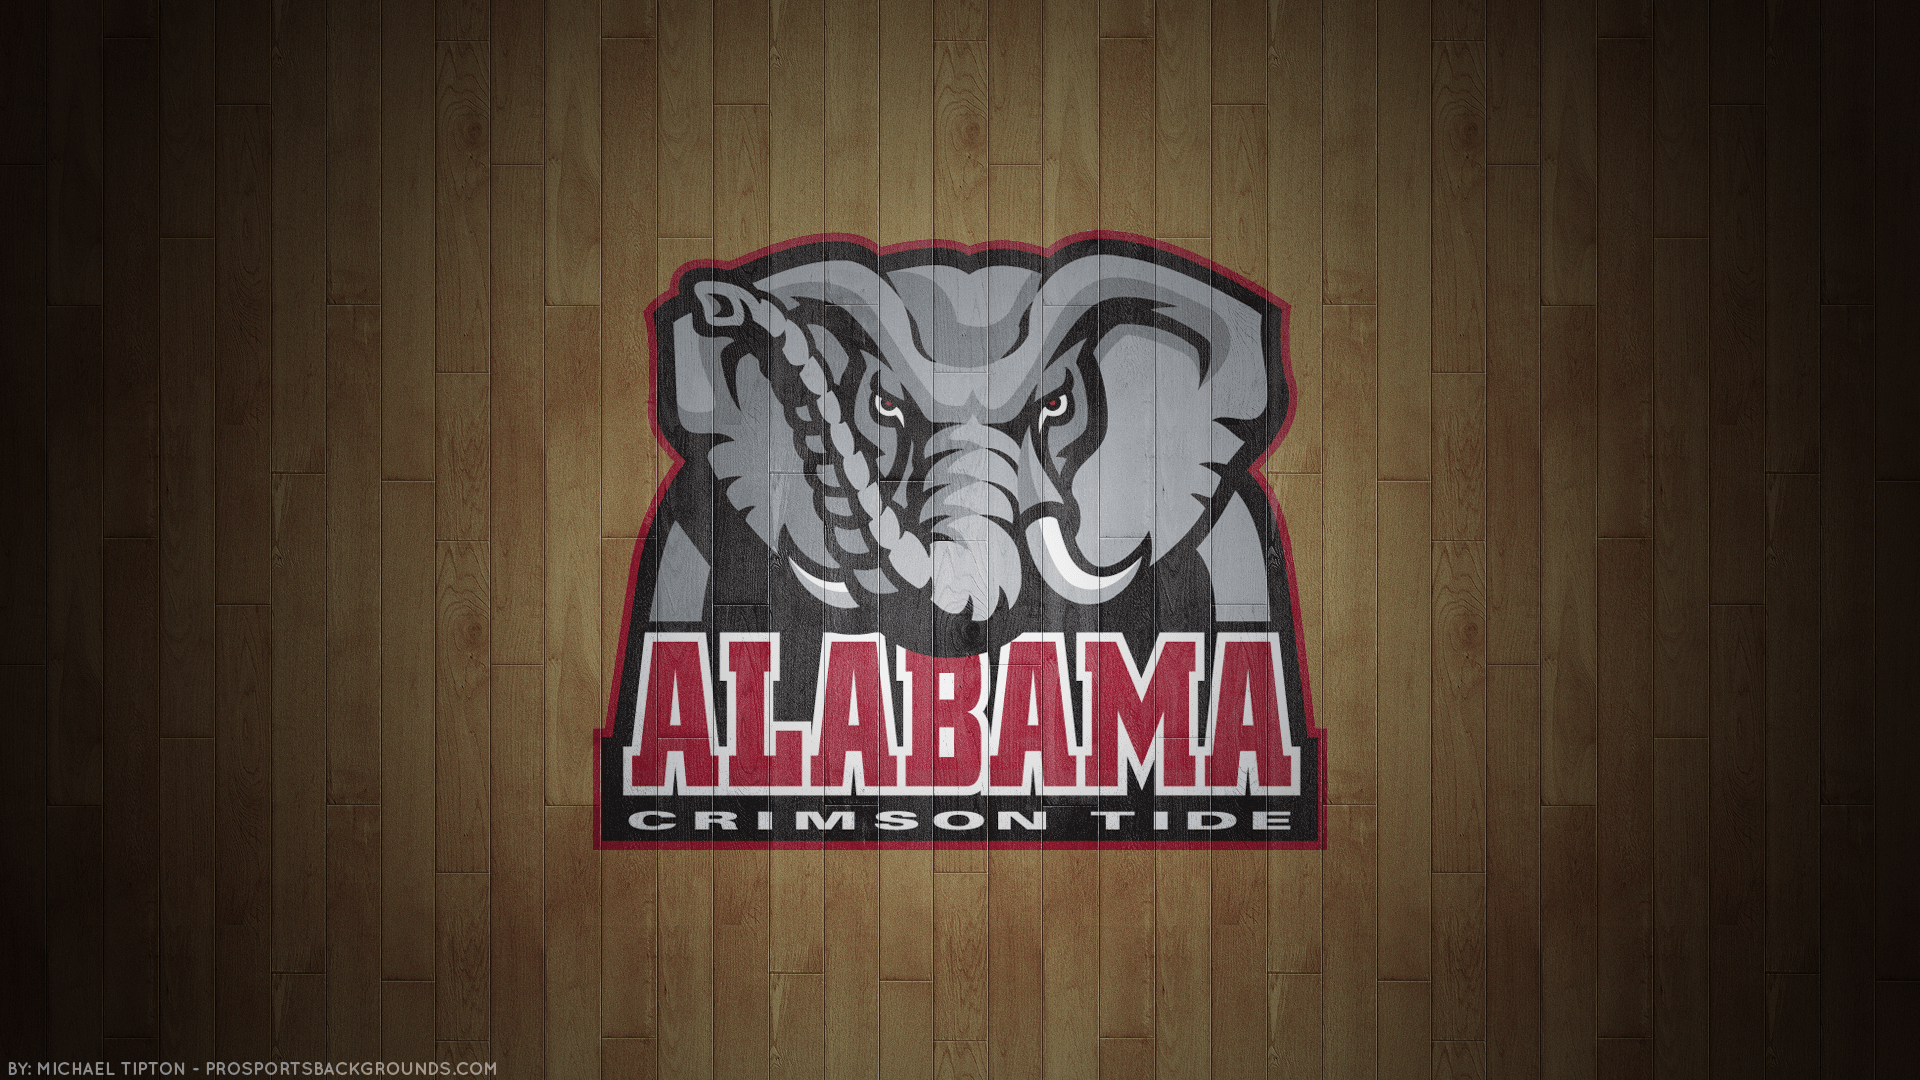 Alabama Crimson Tide Wallpaper. iPhone. Android